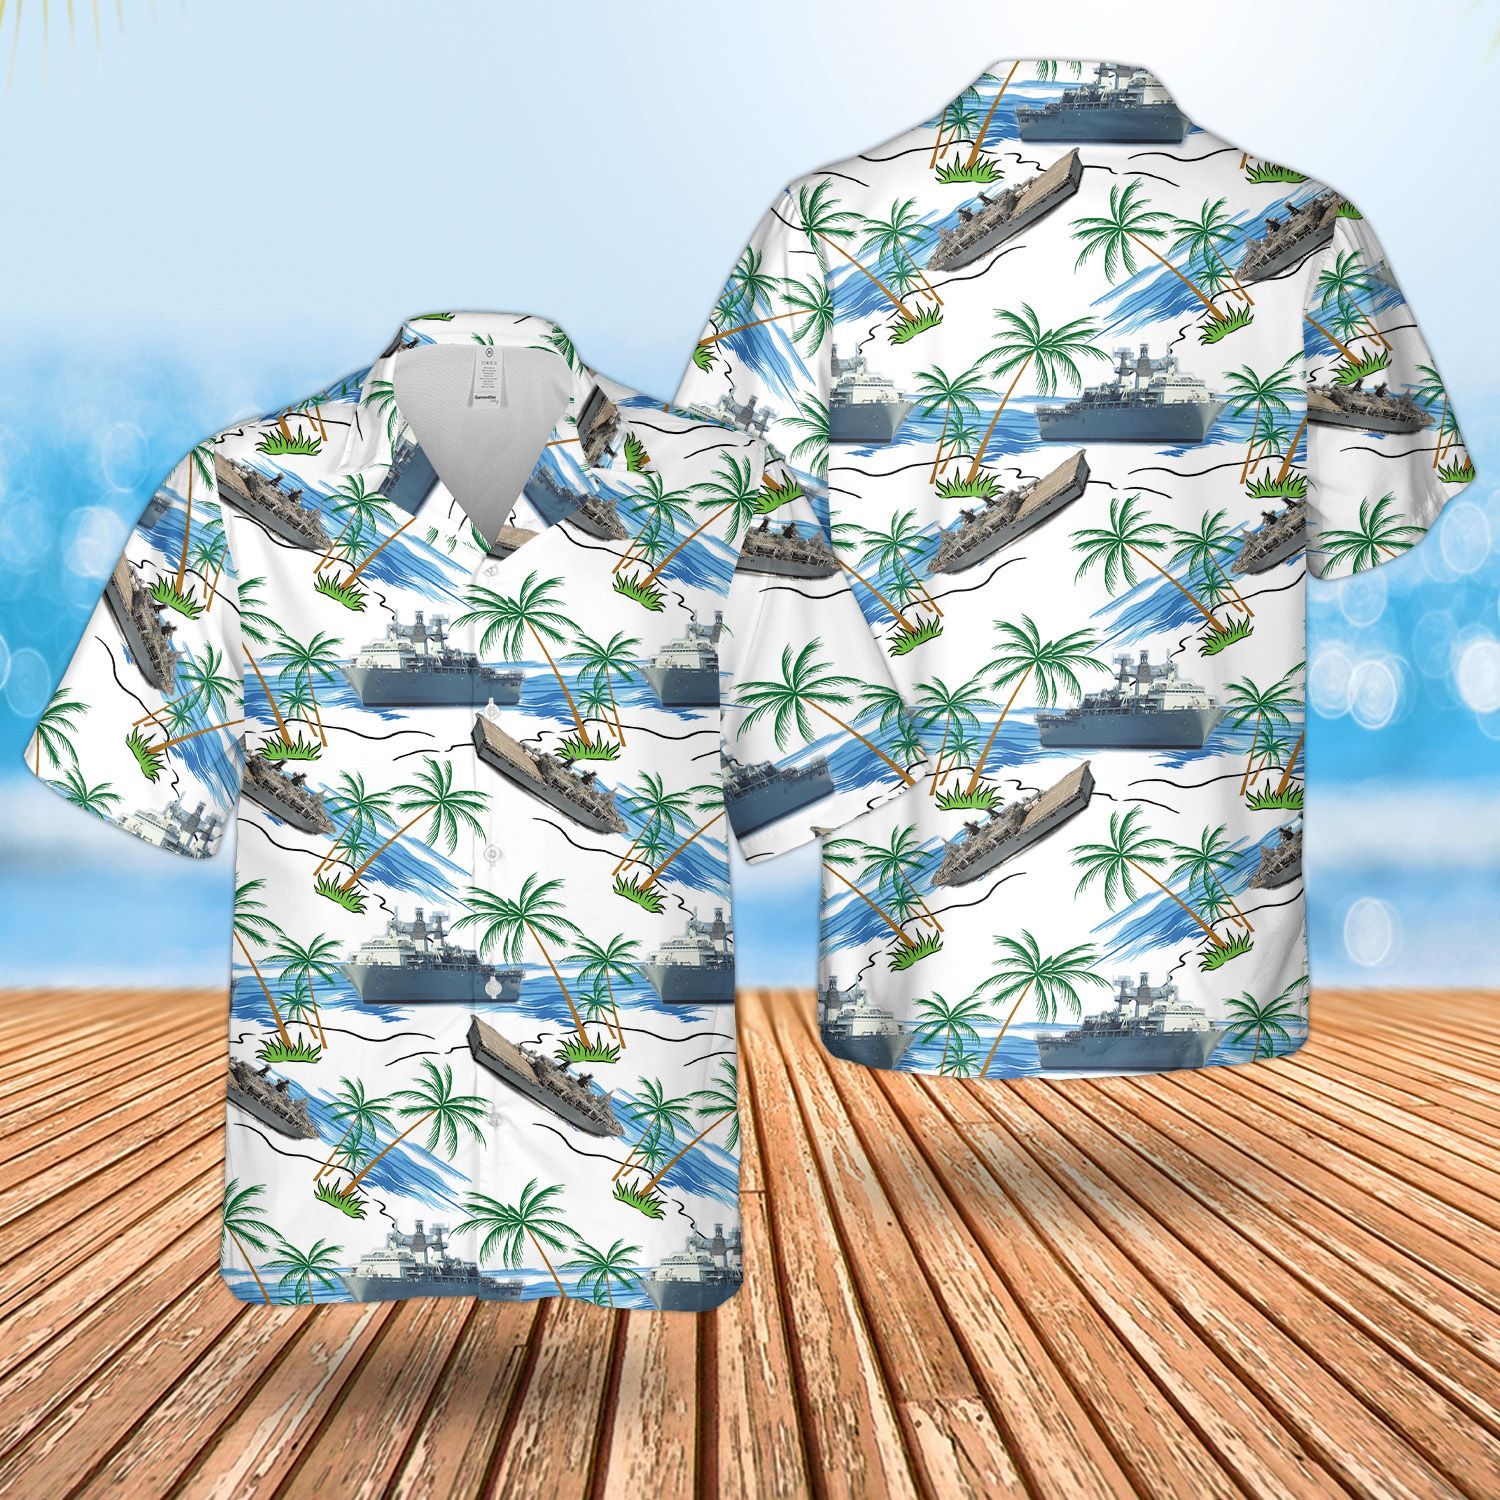 Enjoy your summer with top cool hawaiian shirt below 269